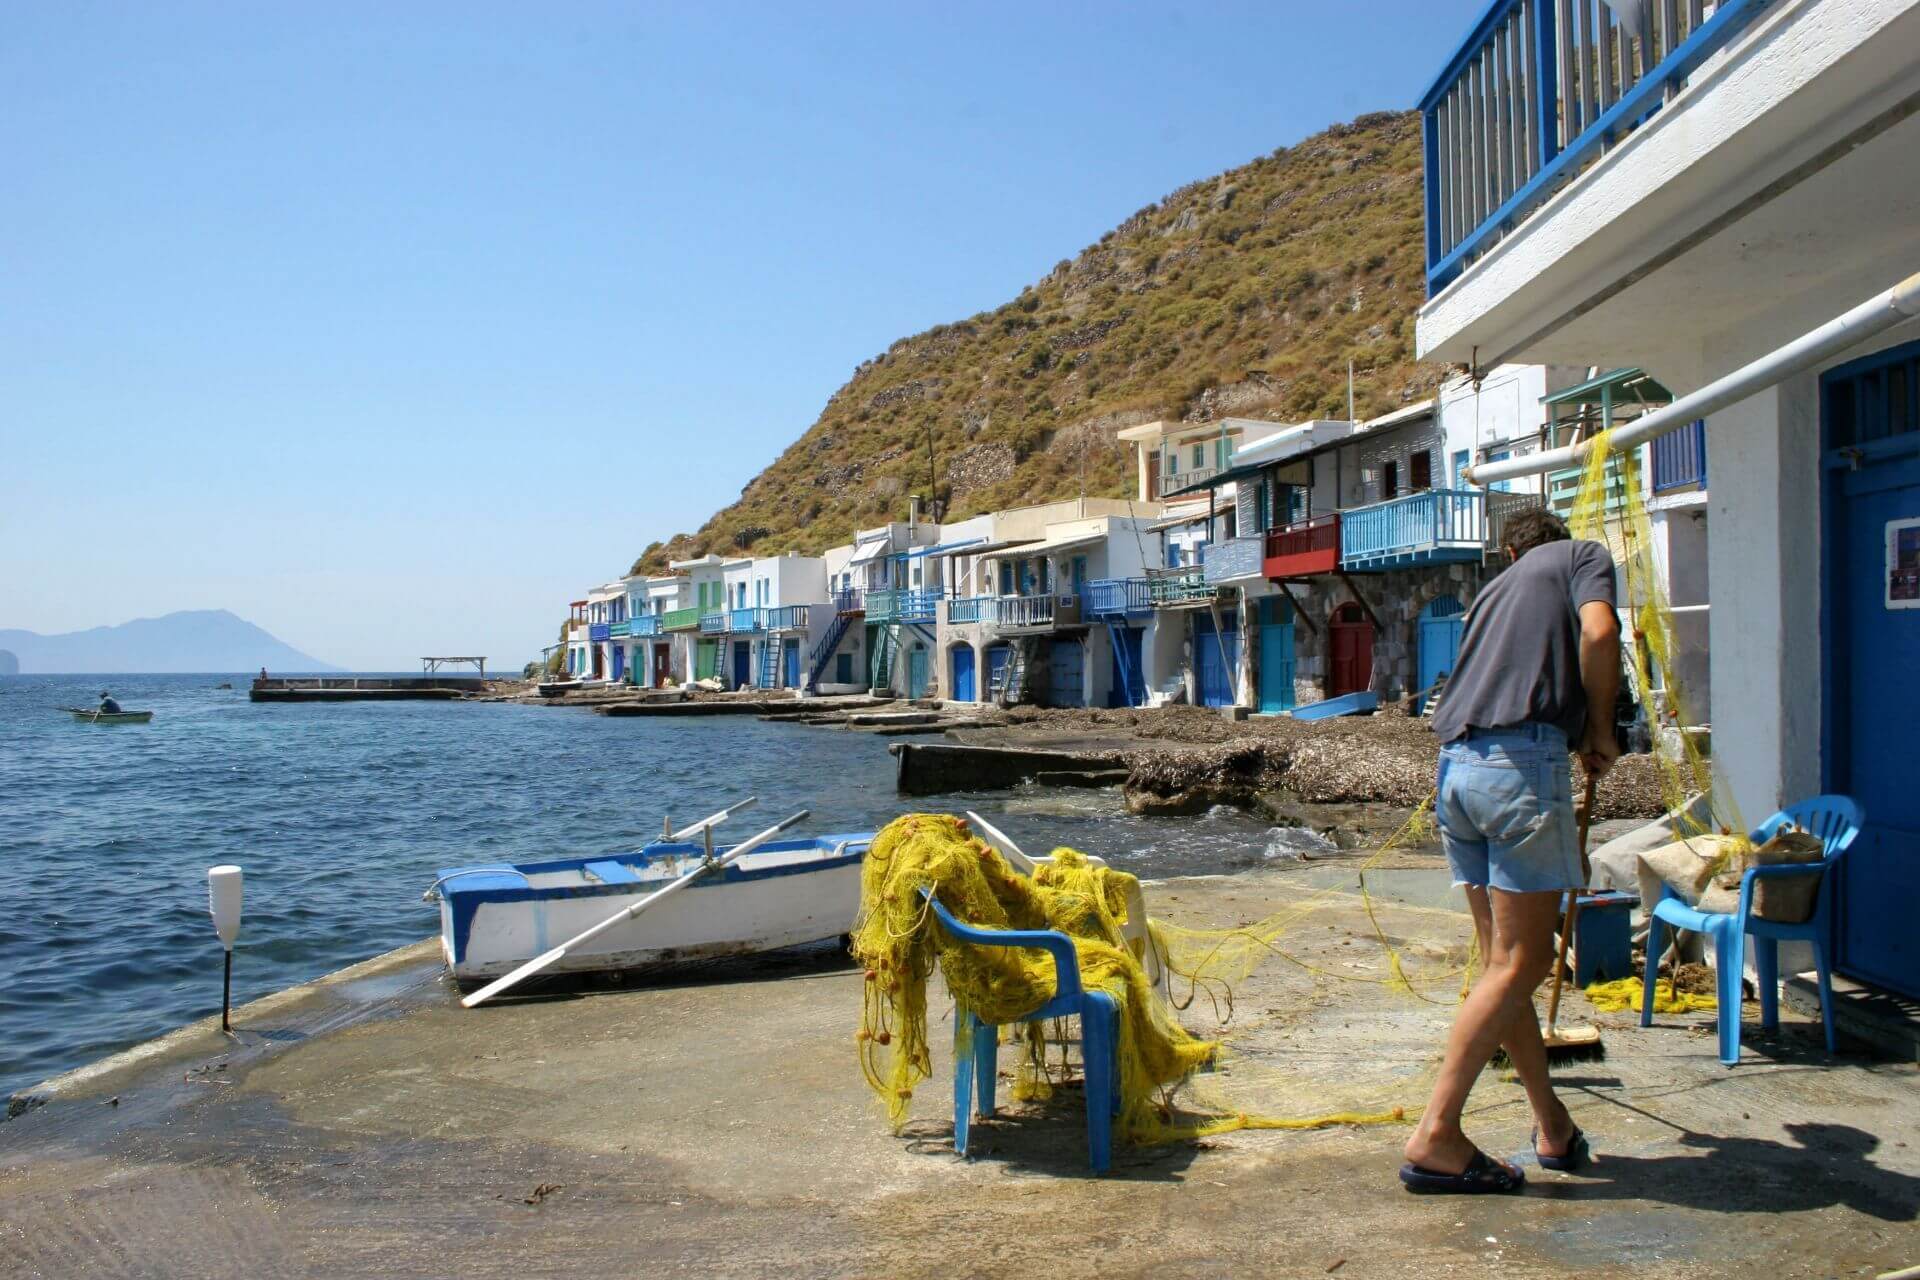 The fishing village of Klima on Milos island